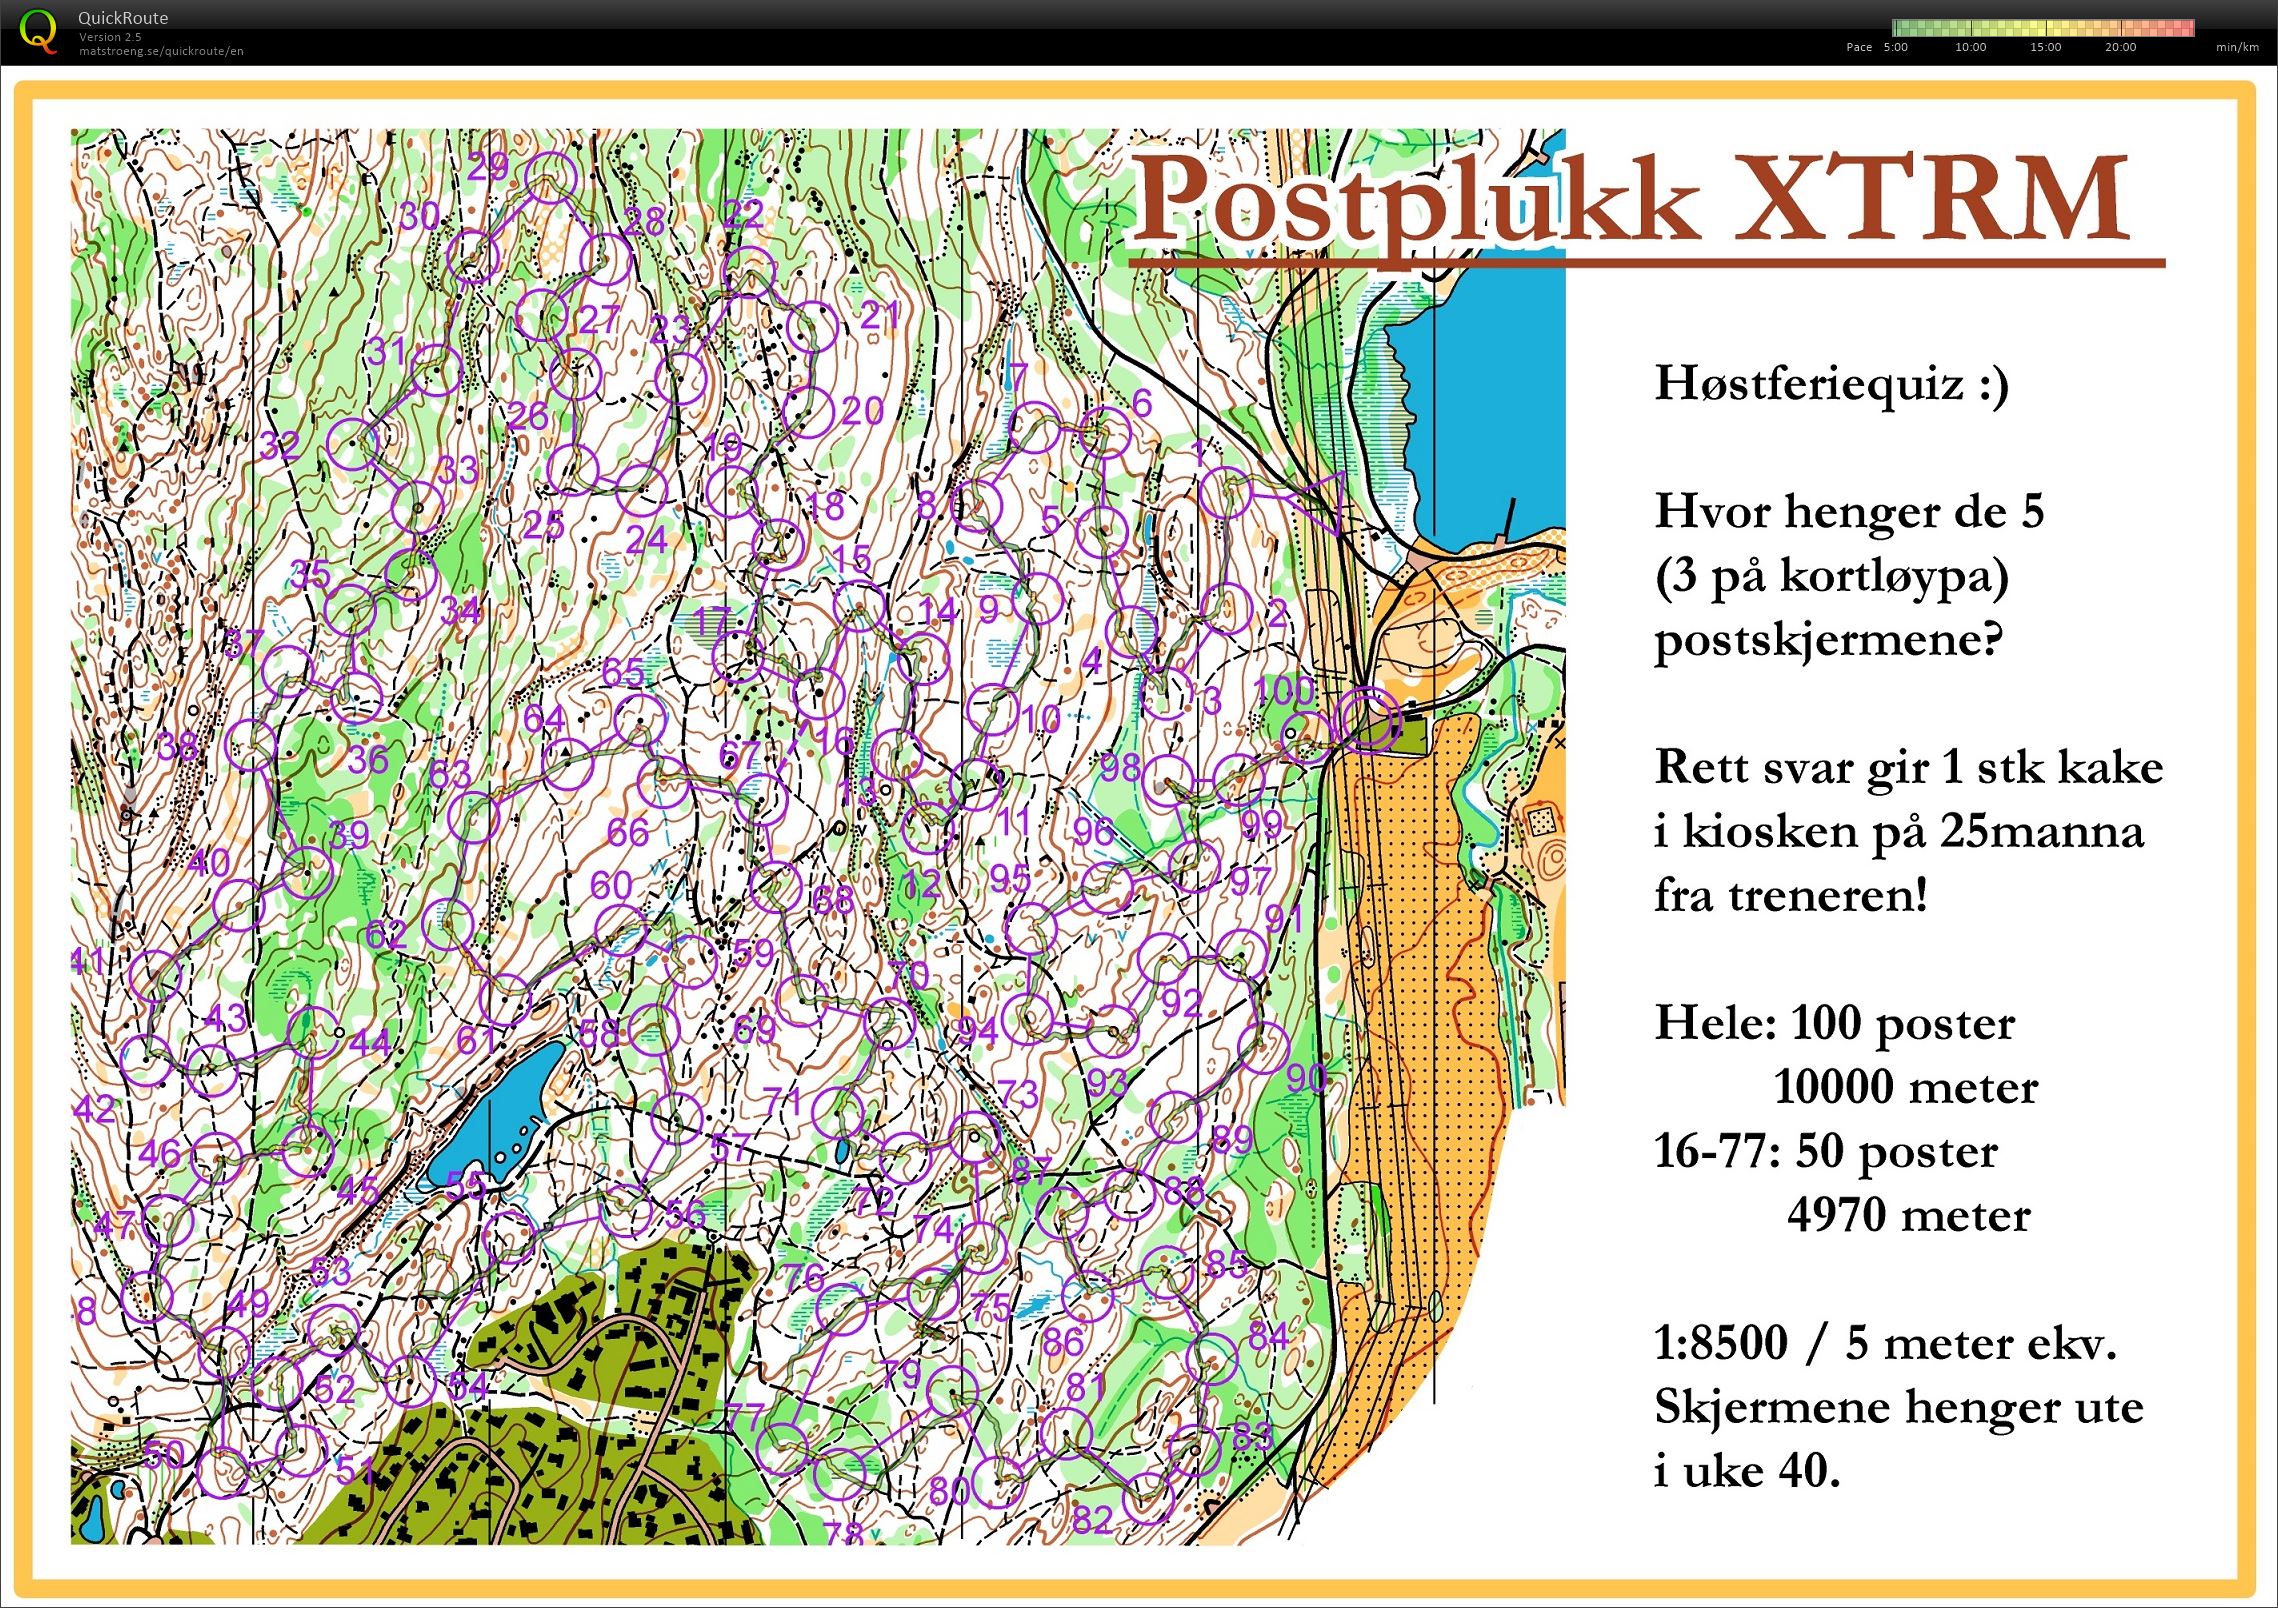 Postplukk XTRM (01-10-2015)